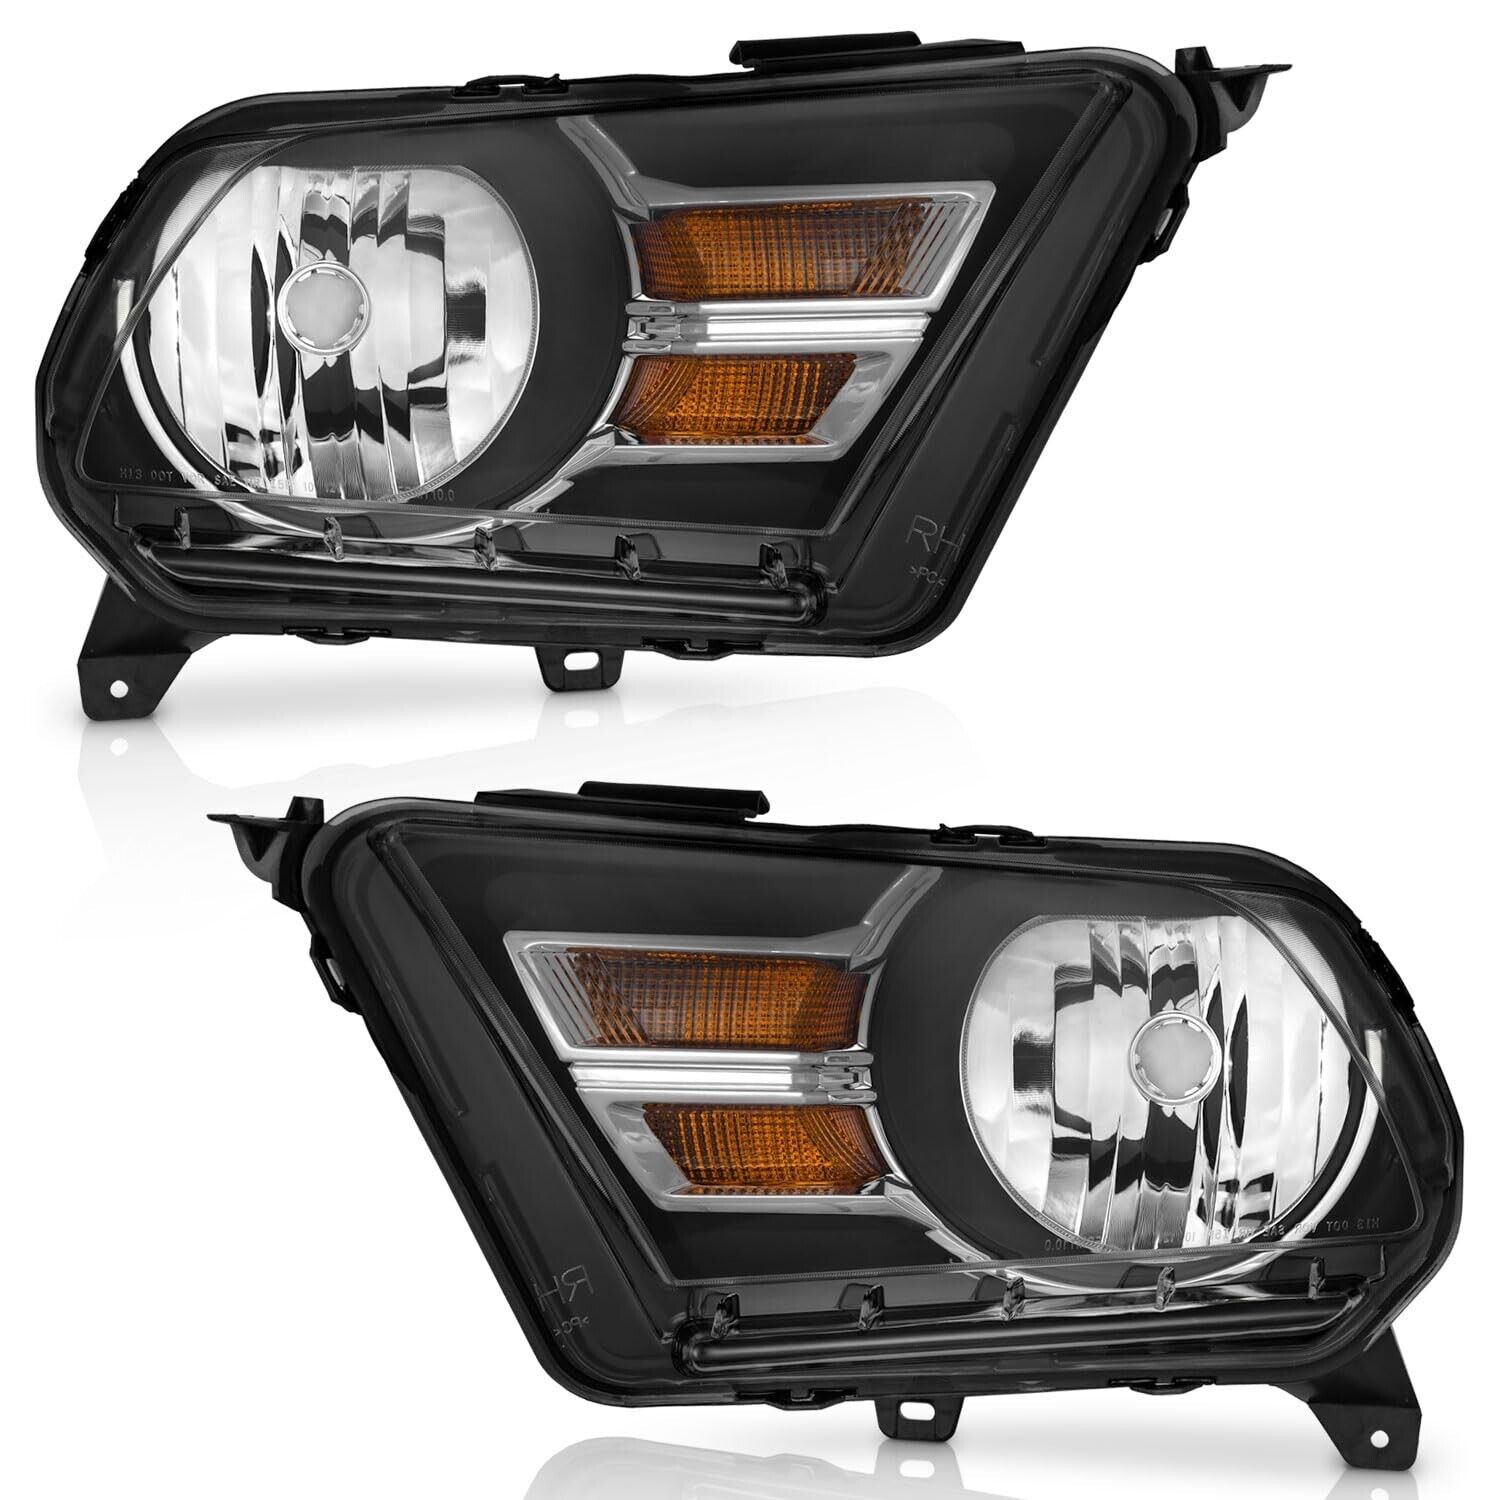 WEELMOTO Headlights For 2010-2014 Ford Mustang Black Halogen Headlamp Left+Right